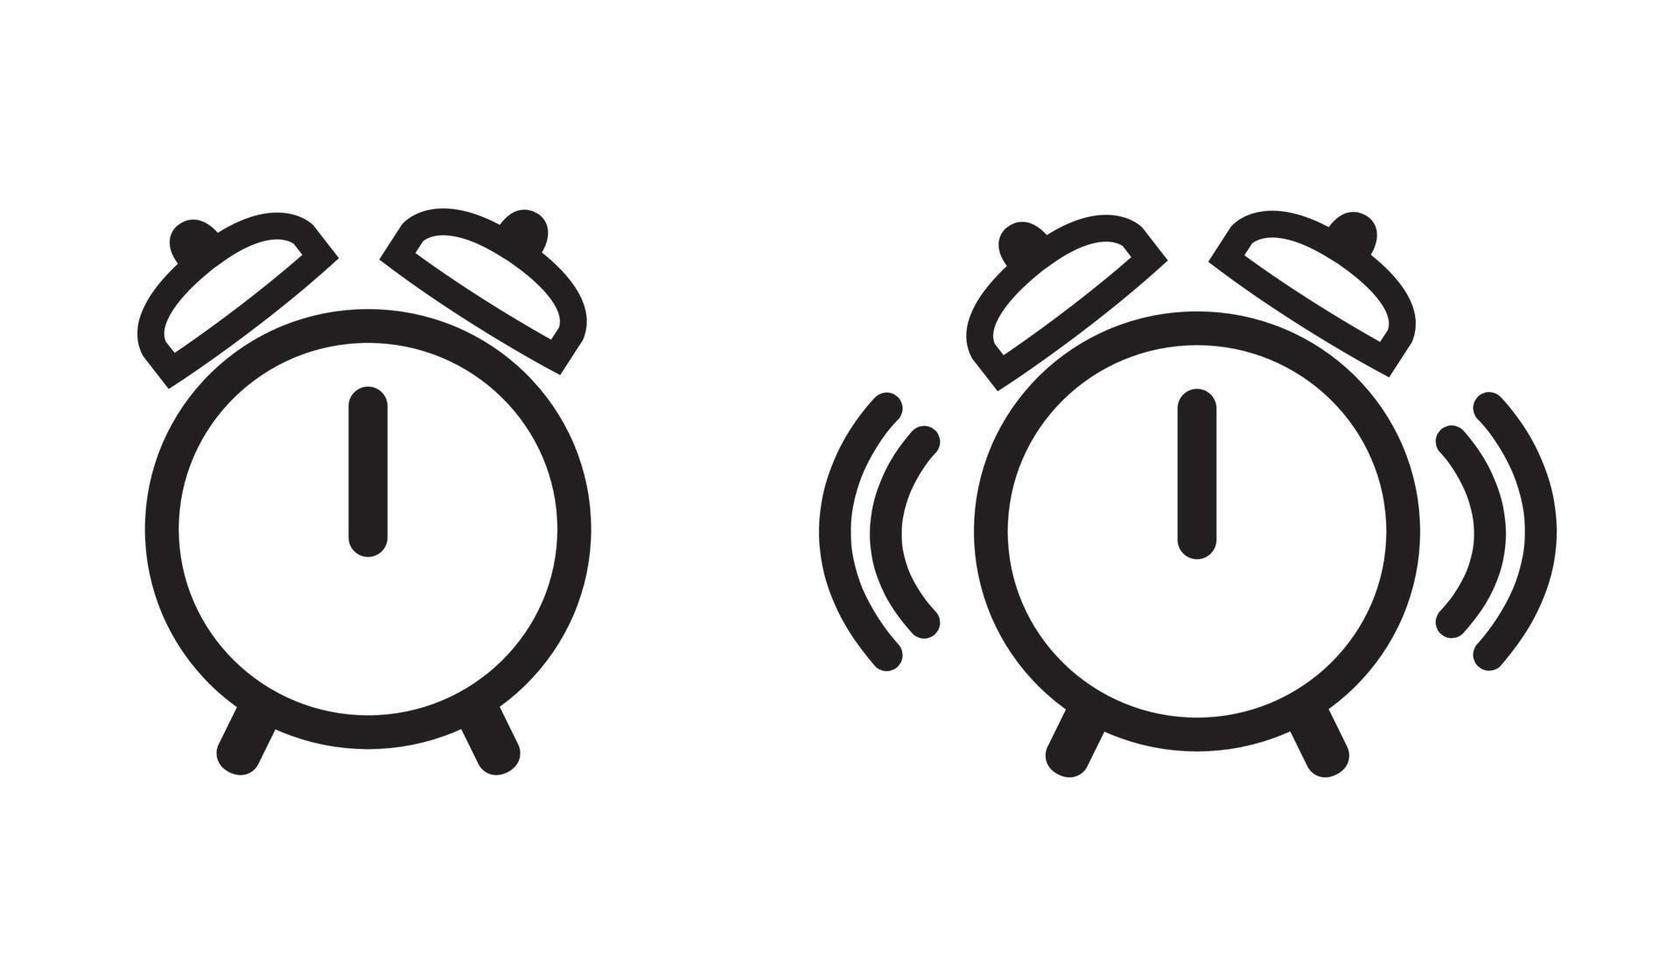 Alarm clock icon on white background, vector